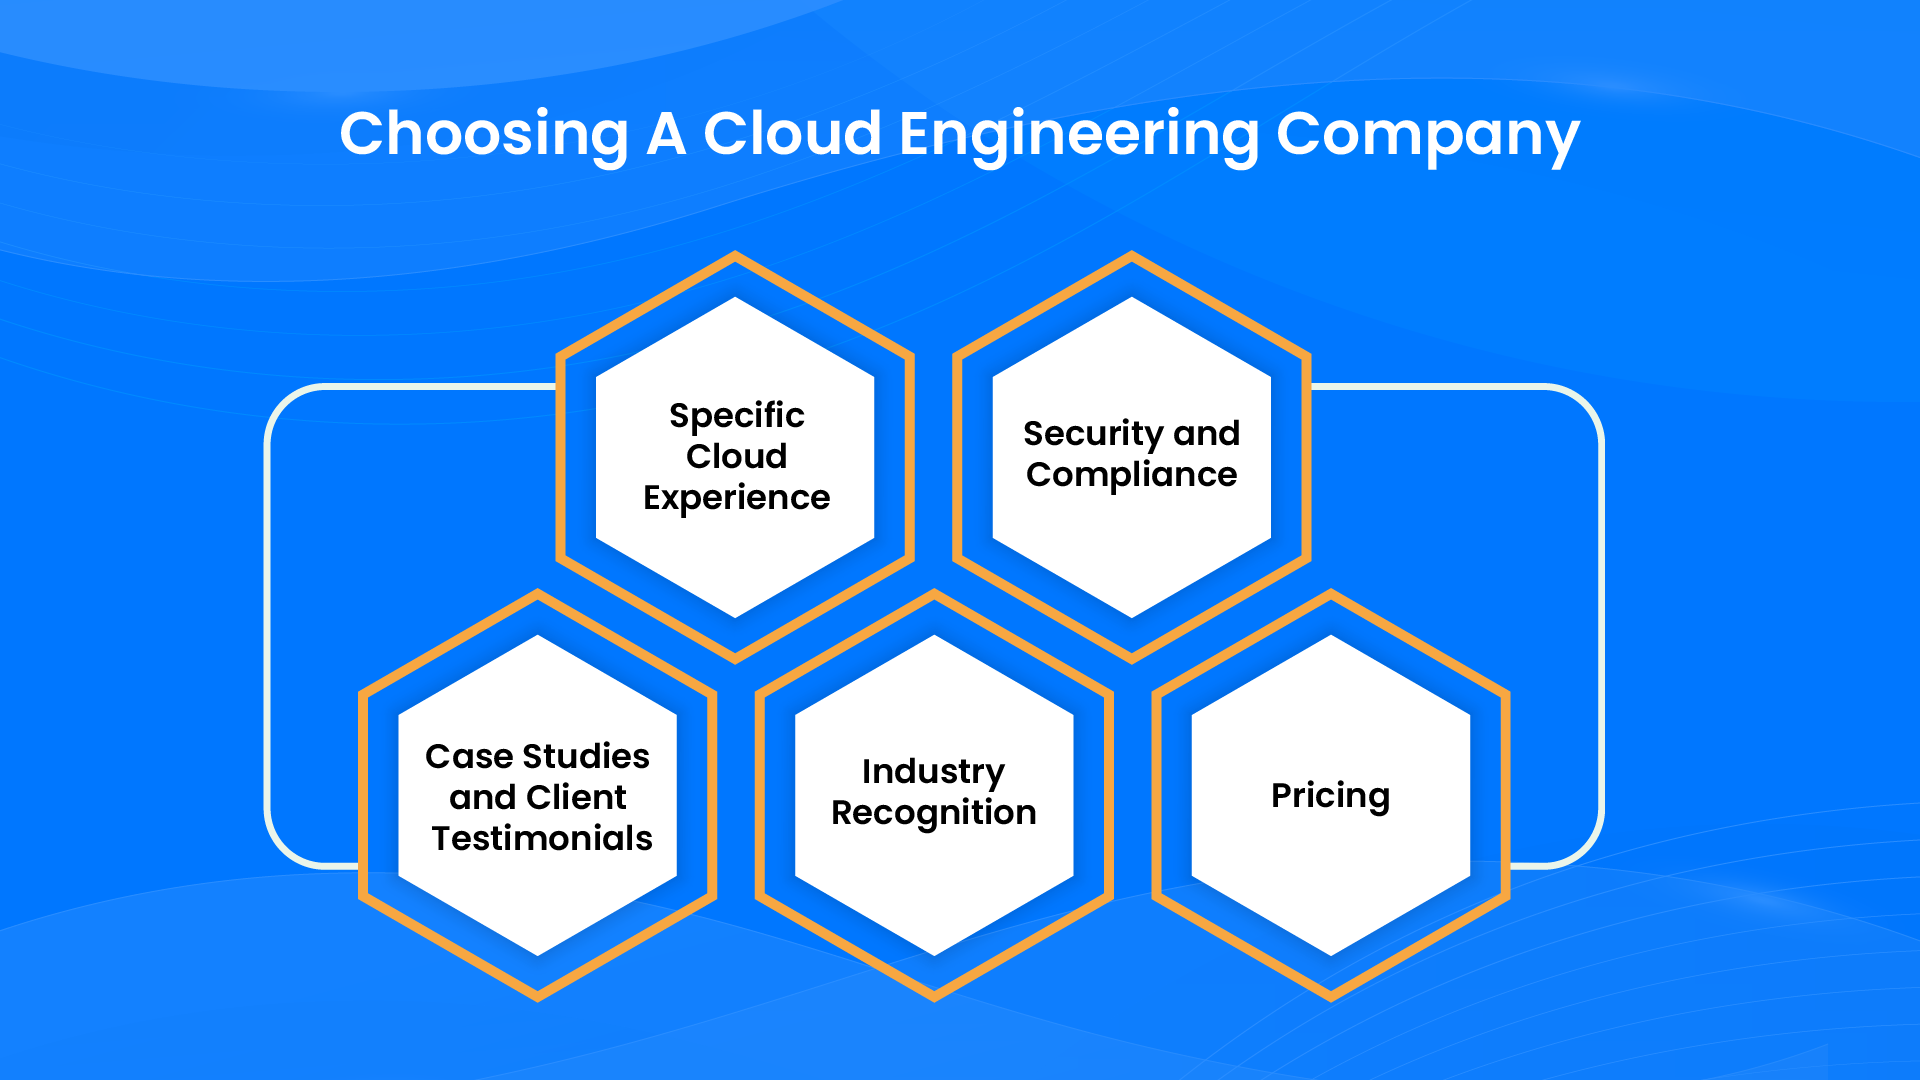 Choosing a cloud engineering company